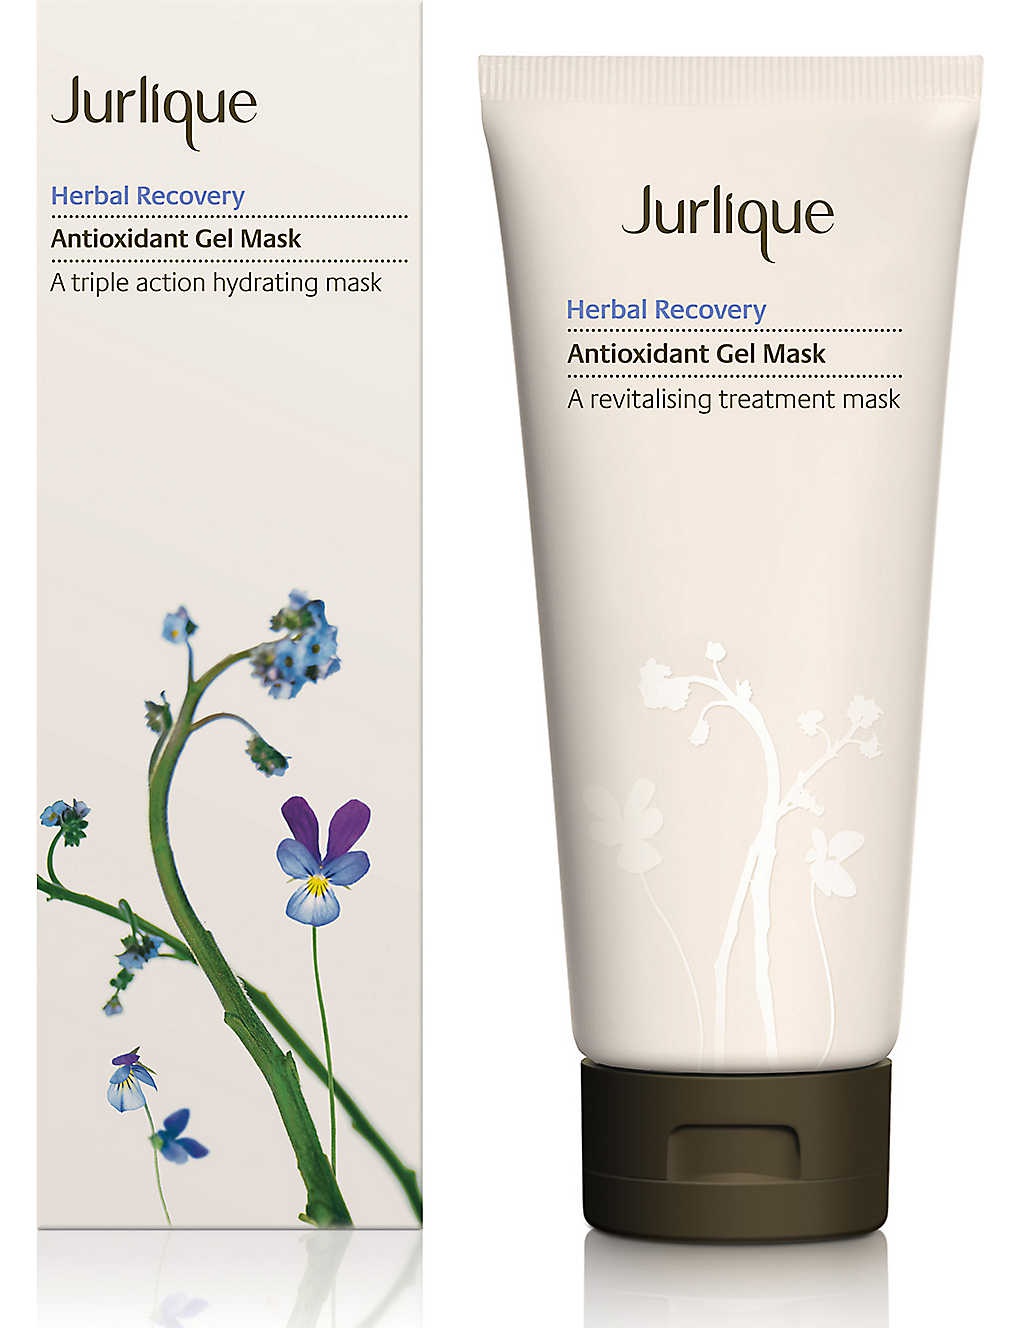 Jurlique Herbal Recovery Antioxidant Gel Mask